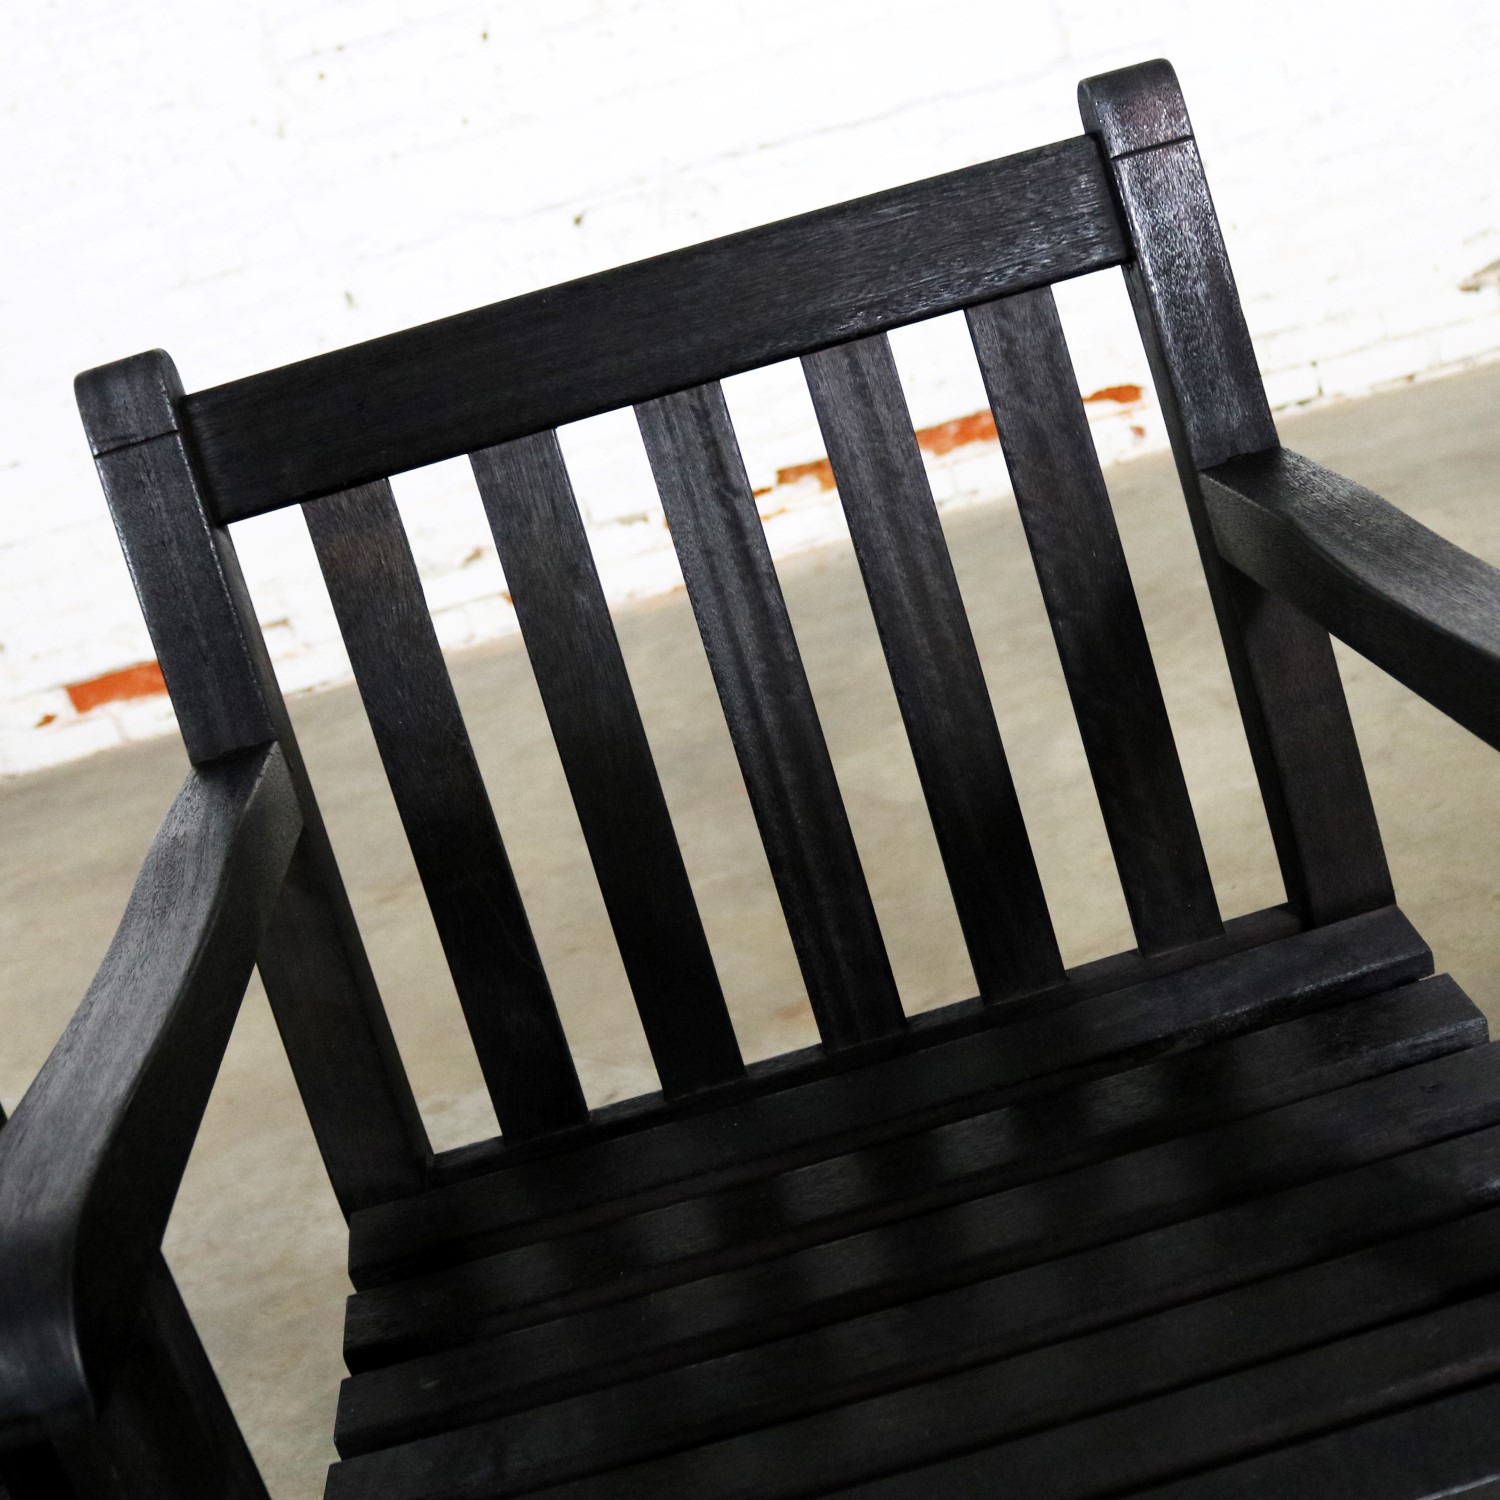 Vintage Windsor Blackened Teak Outdoor Armchairs